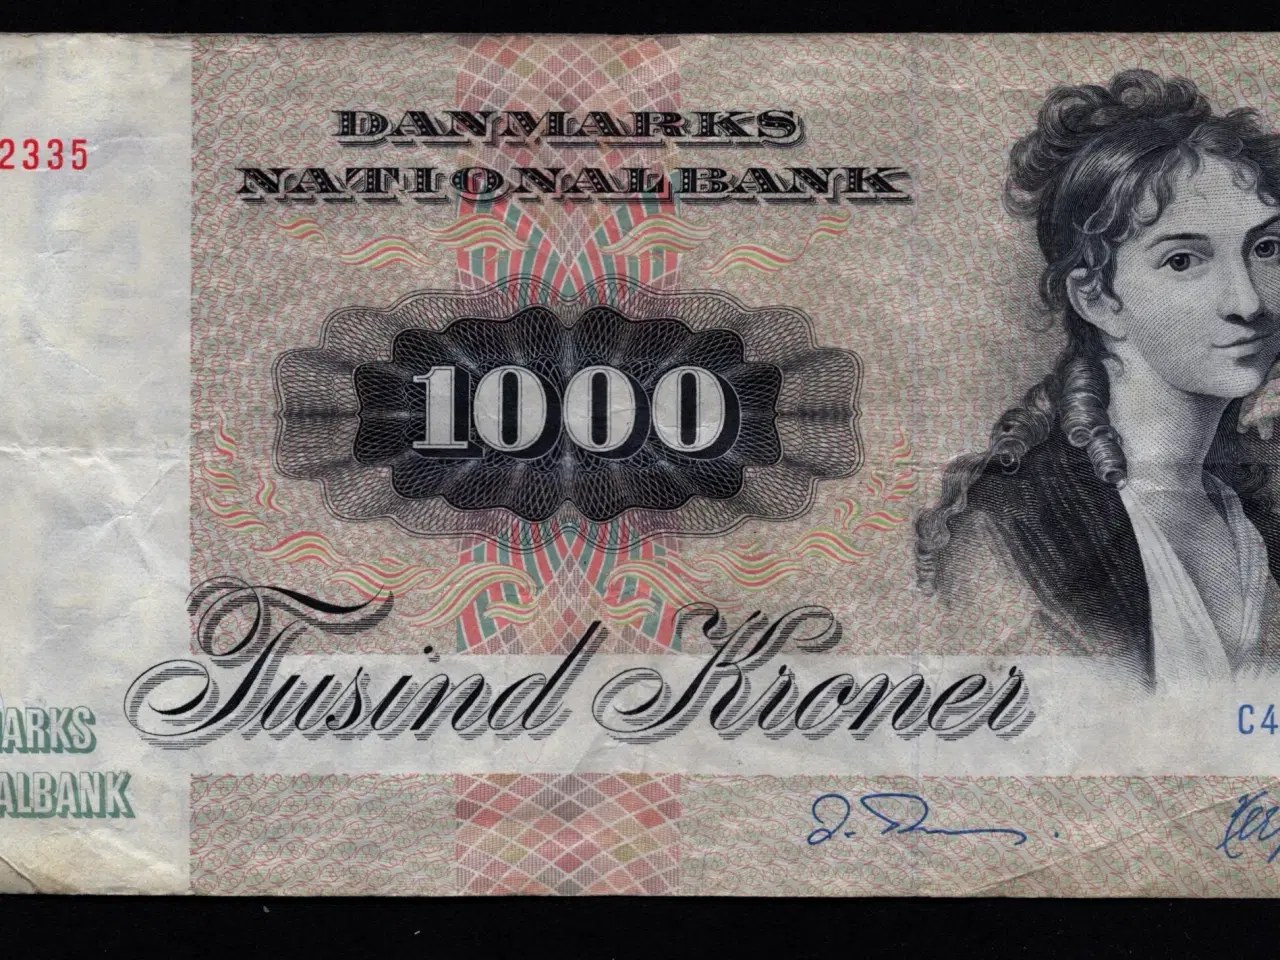 Billede 1 - 1000 kr seddel 1992 C4